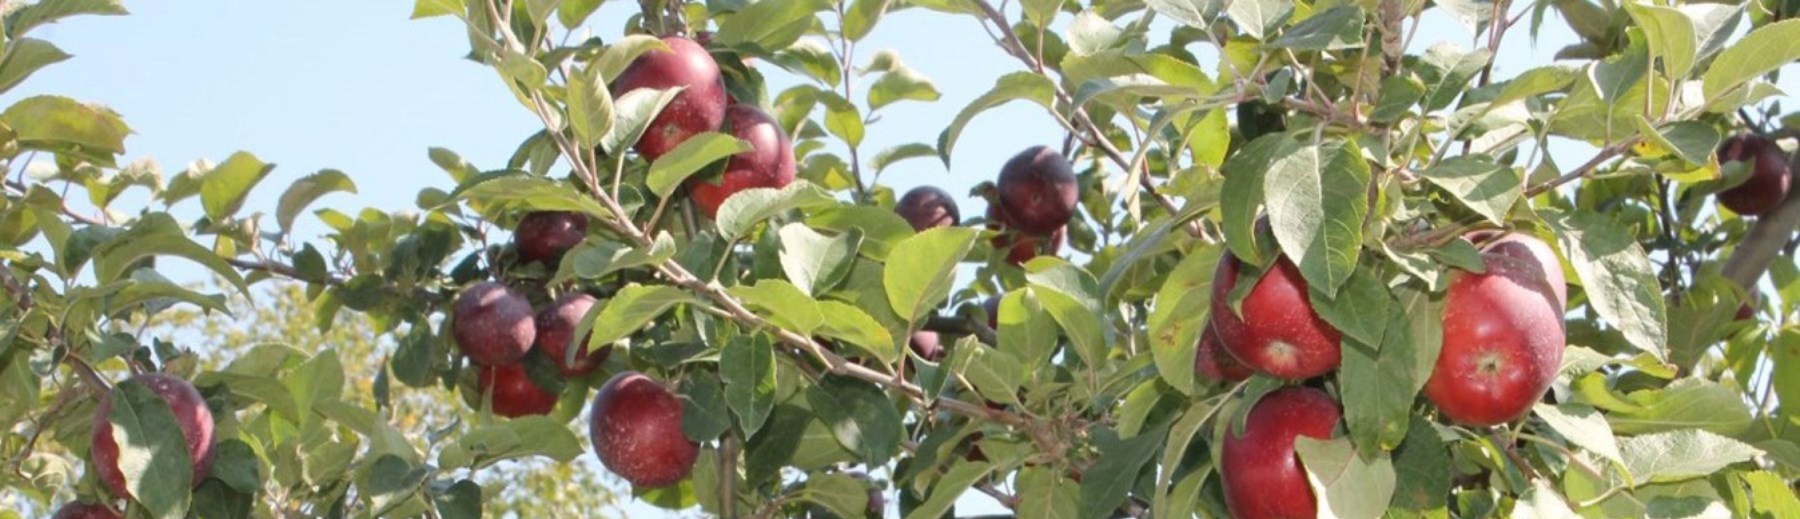 Apples growing on an apple tree